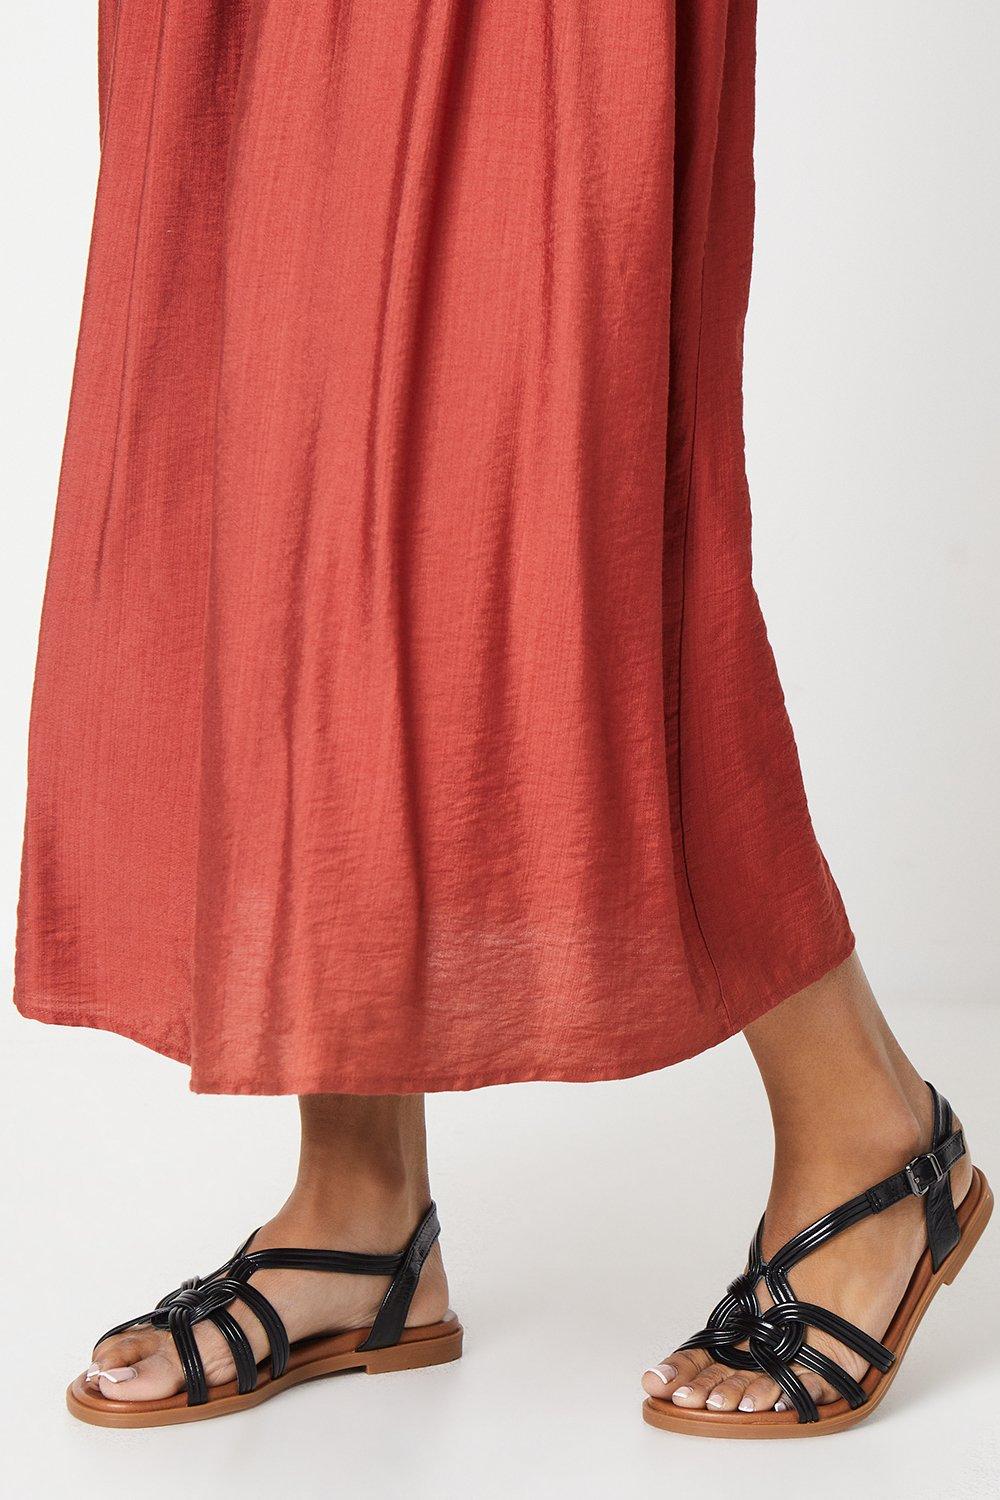 Womens Good For The Sole: Morticia Interwoven Flexi Sole Flat Sandals